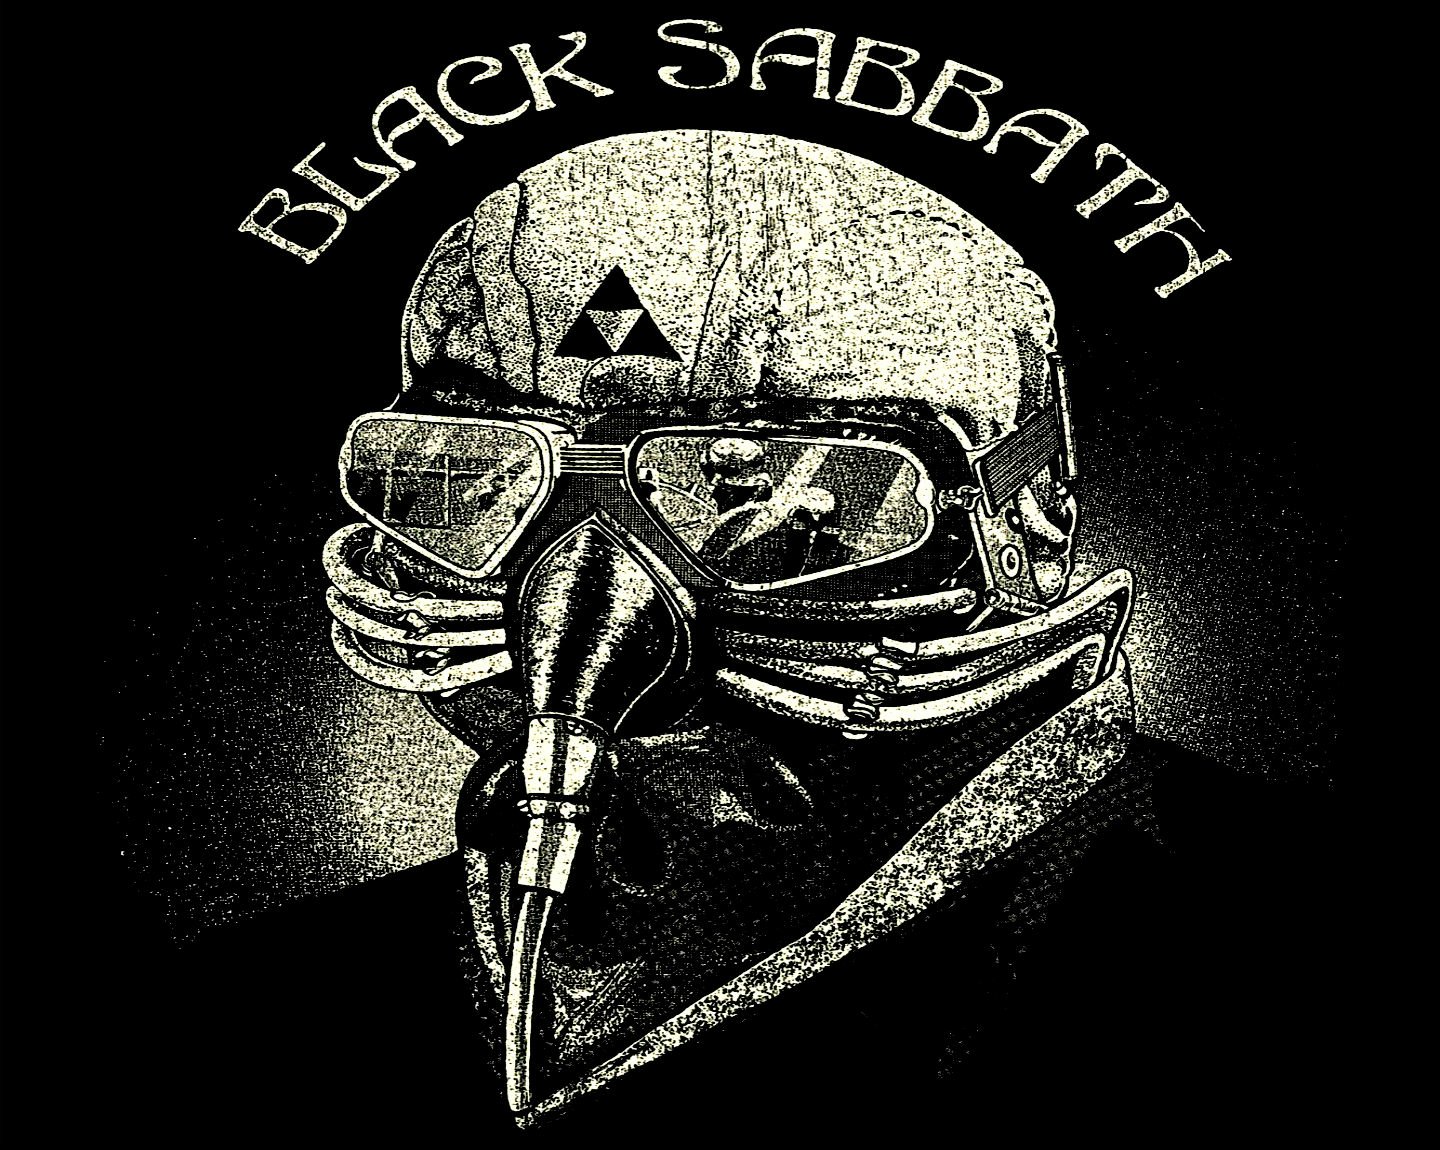 Music Black Sabbath Wallpaper